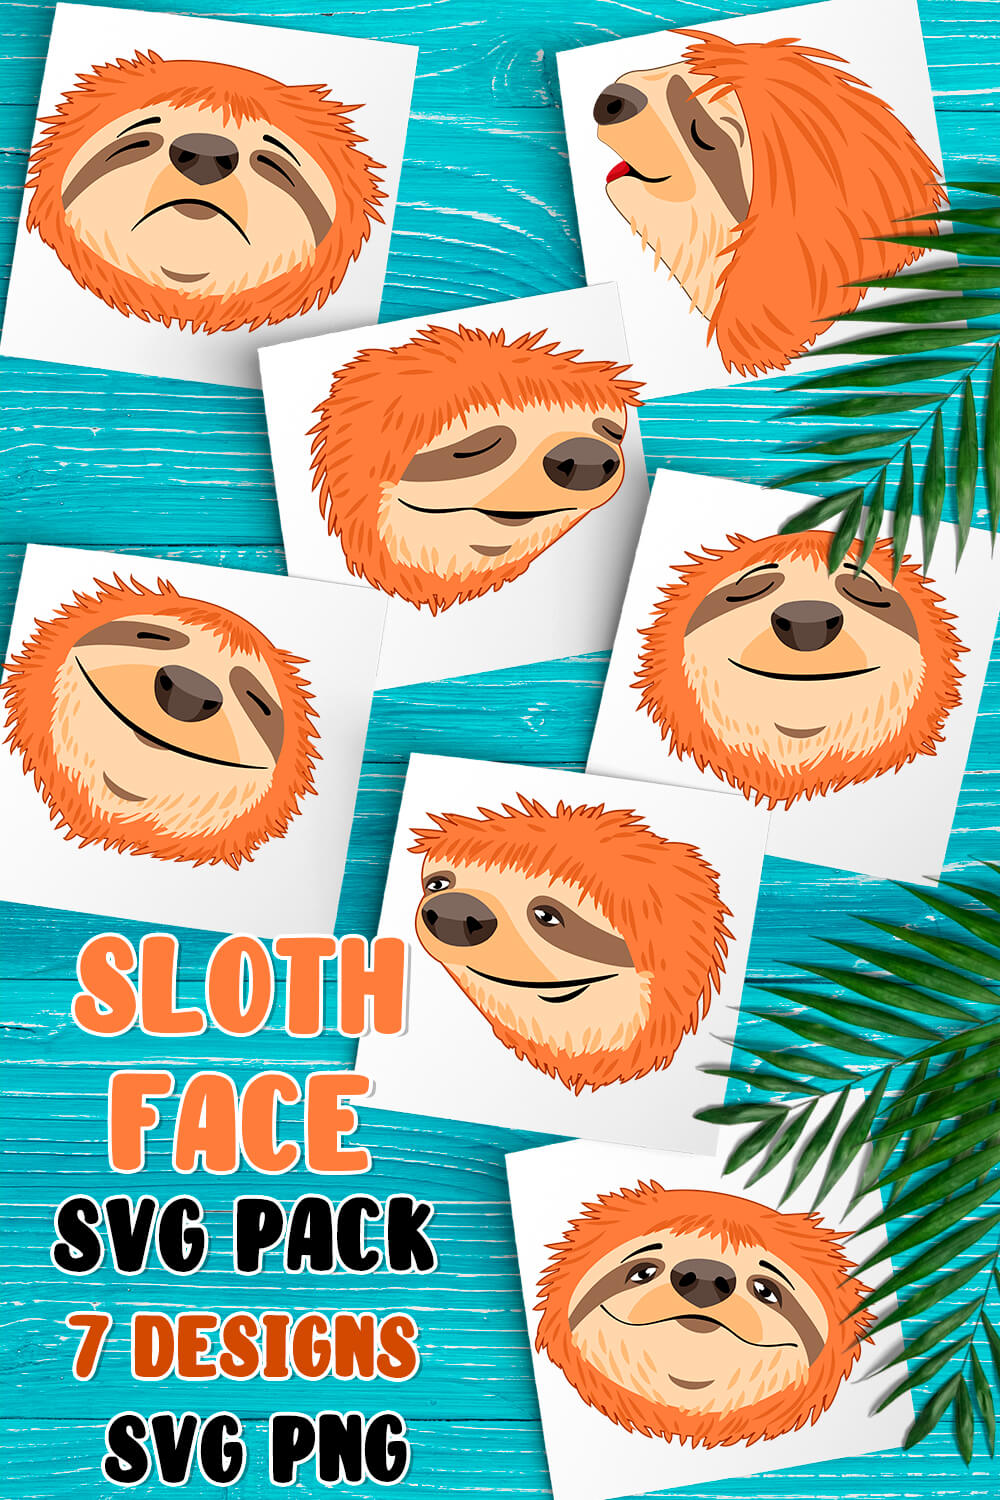 Sloth face svg pack - 7 designs.